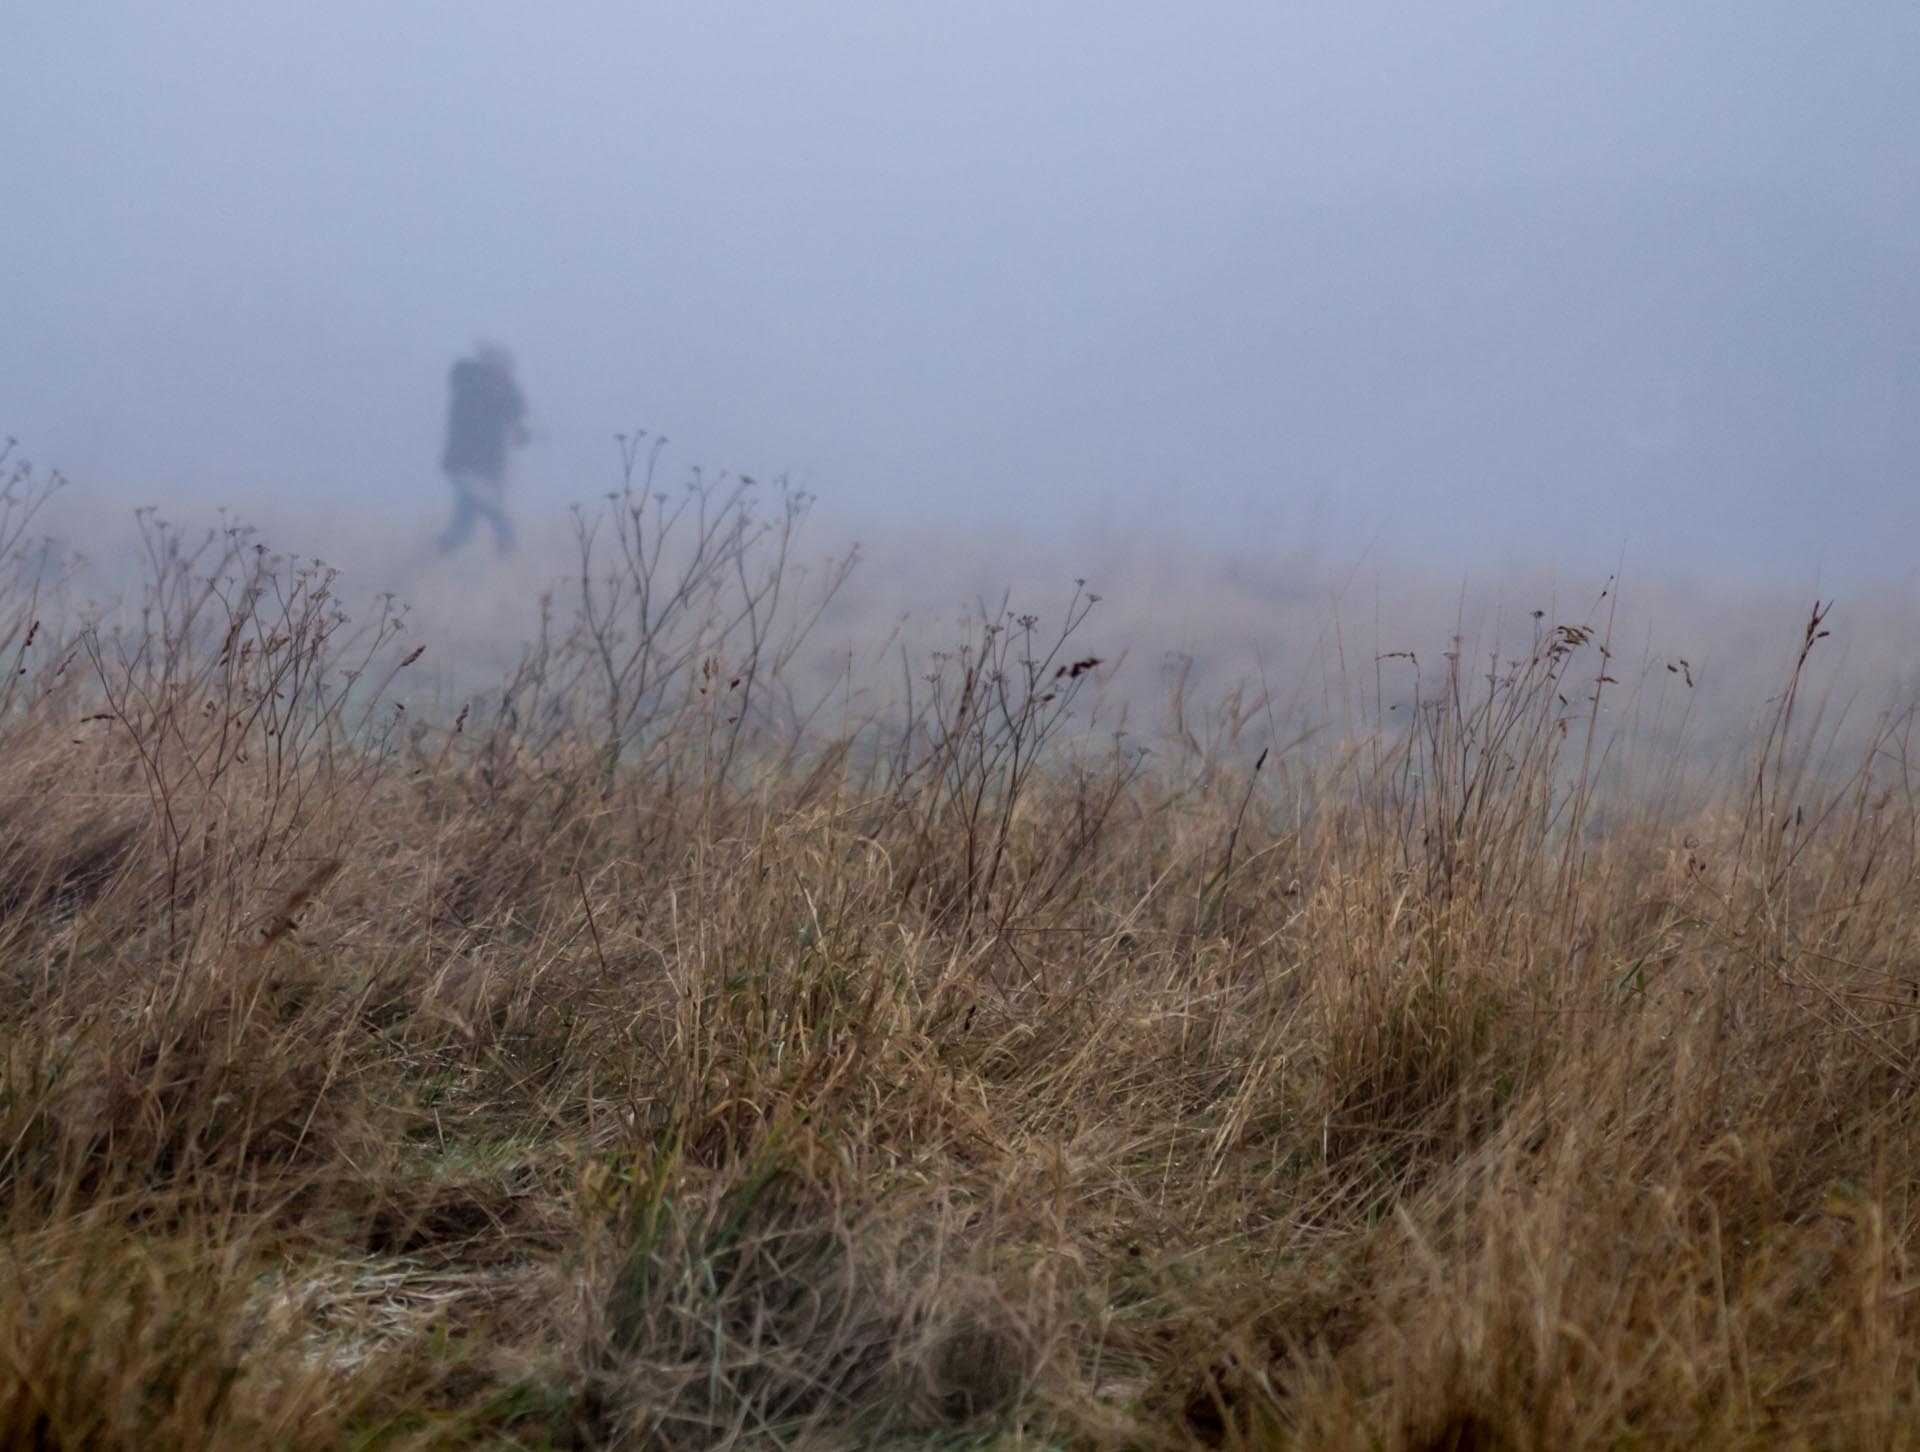 Keeping Safe: Walking in the fog